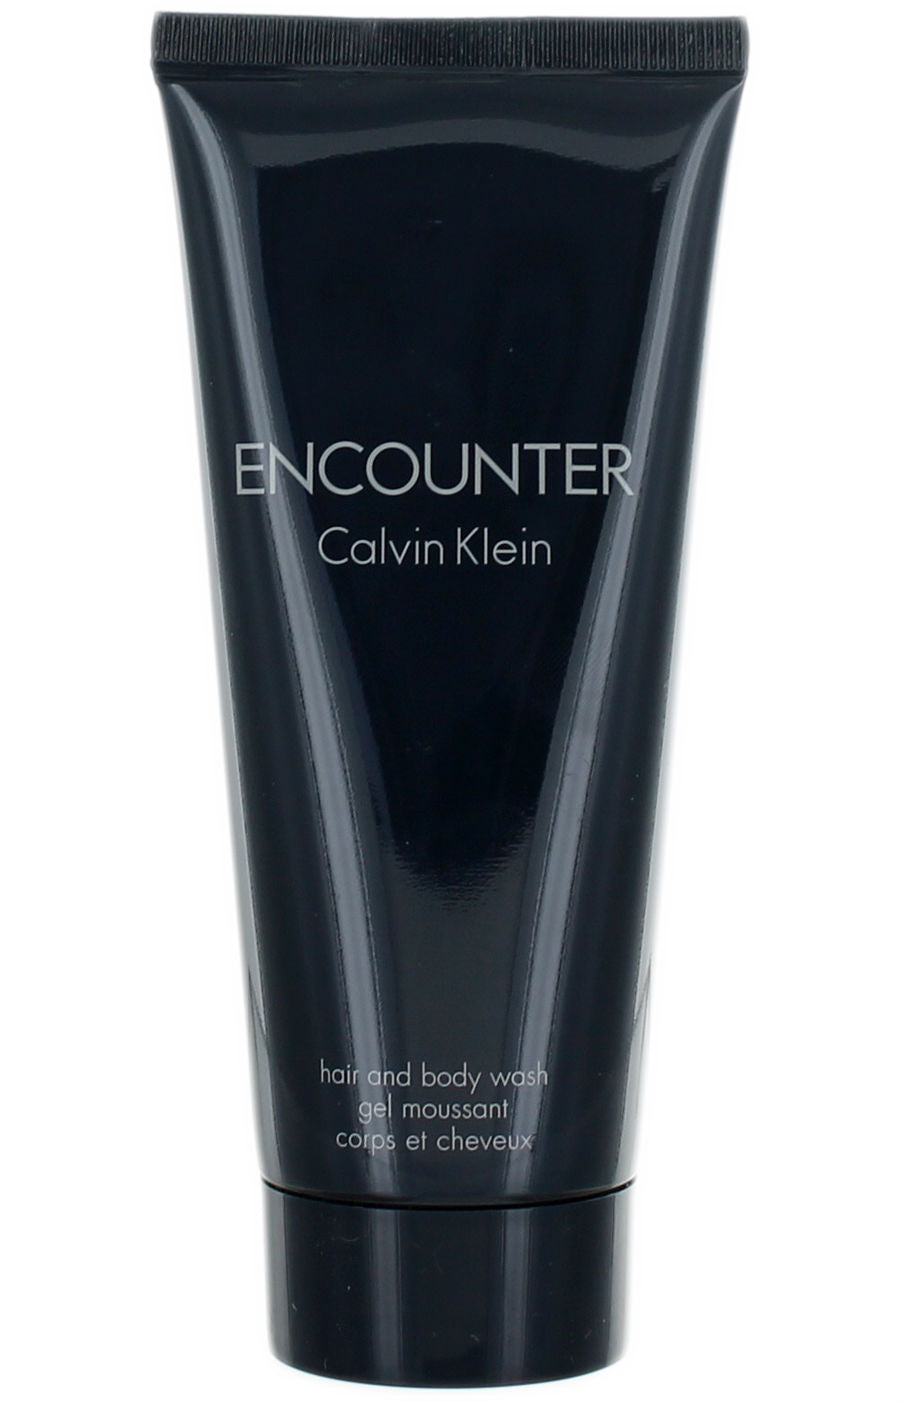 Encounter for Men Calvin Klein Hair and Body Wash 3.4 oz – Cosmic-Perfume